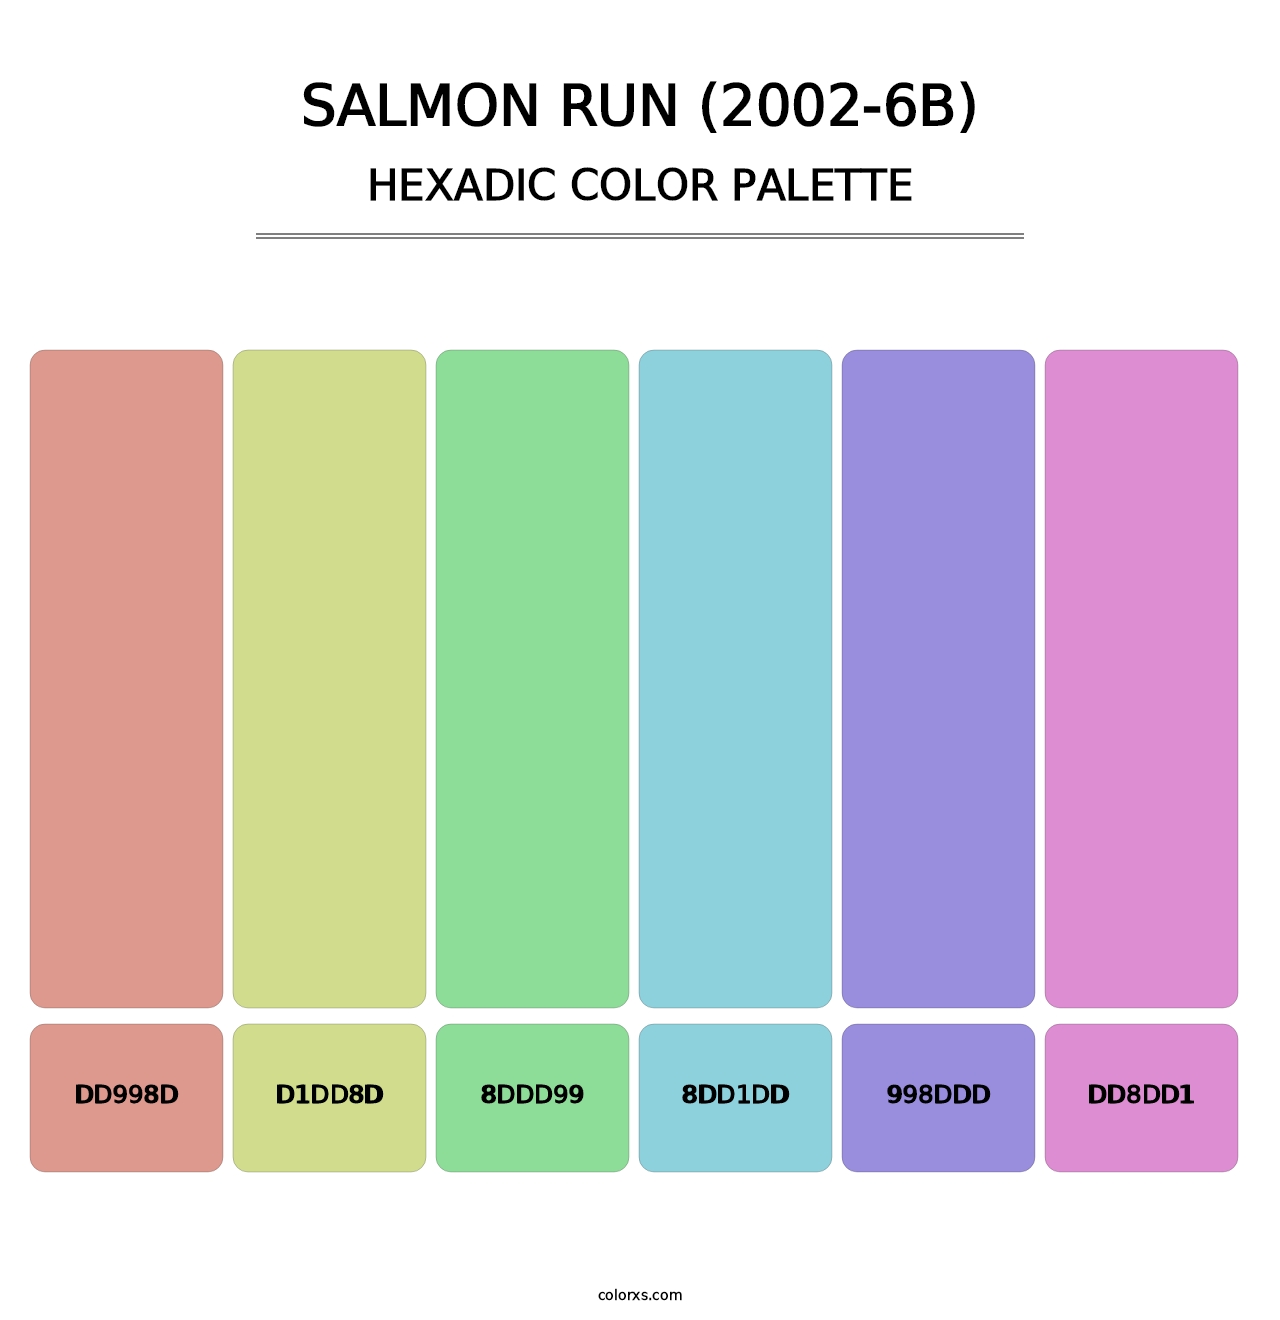 Salmon Run (2002-6B) - Hexadic Color Palette